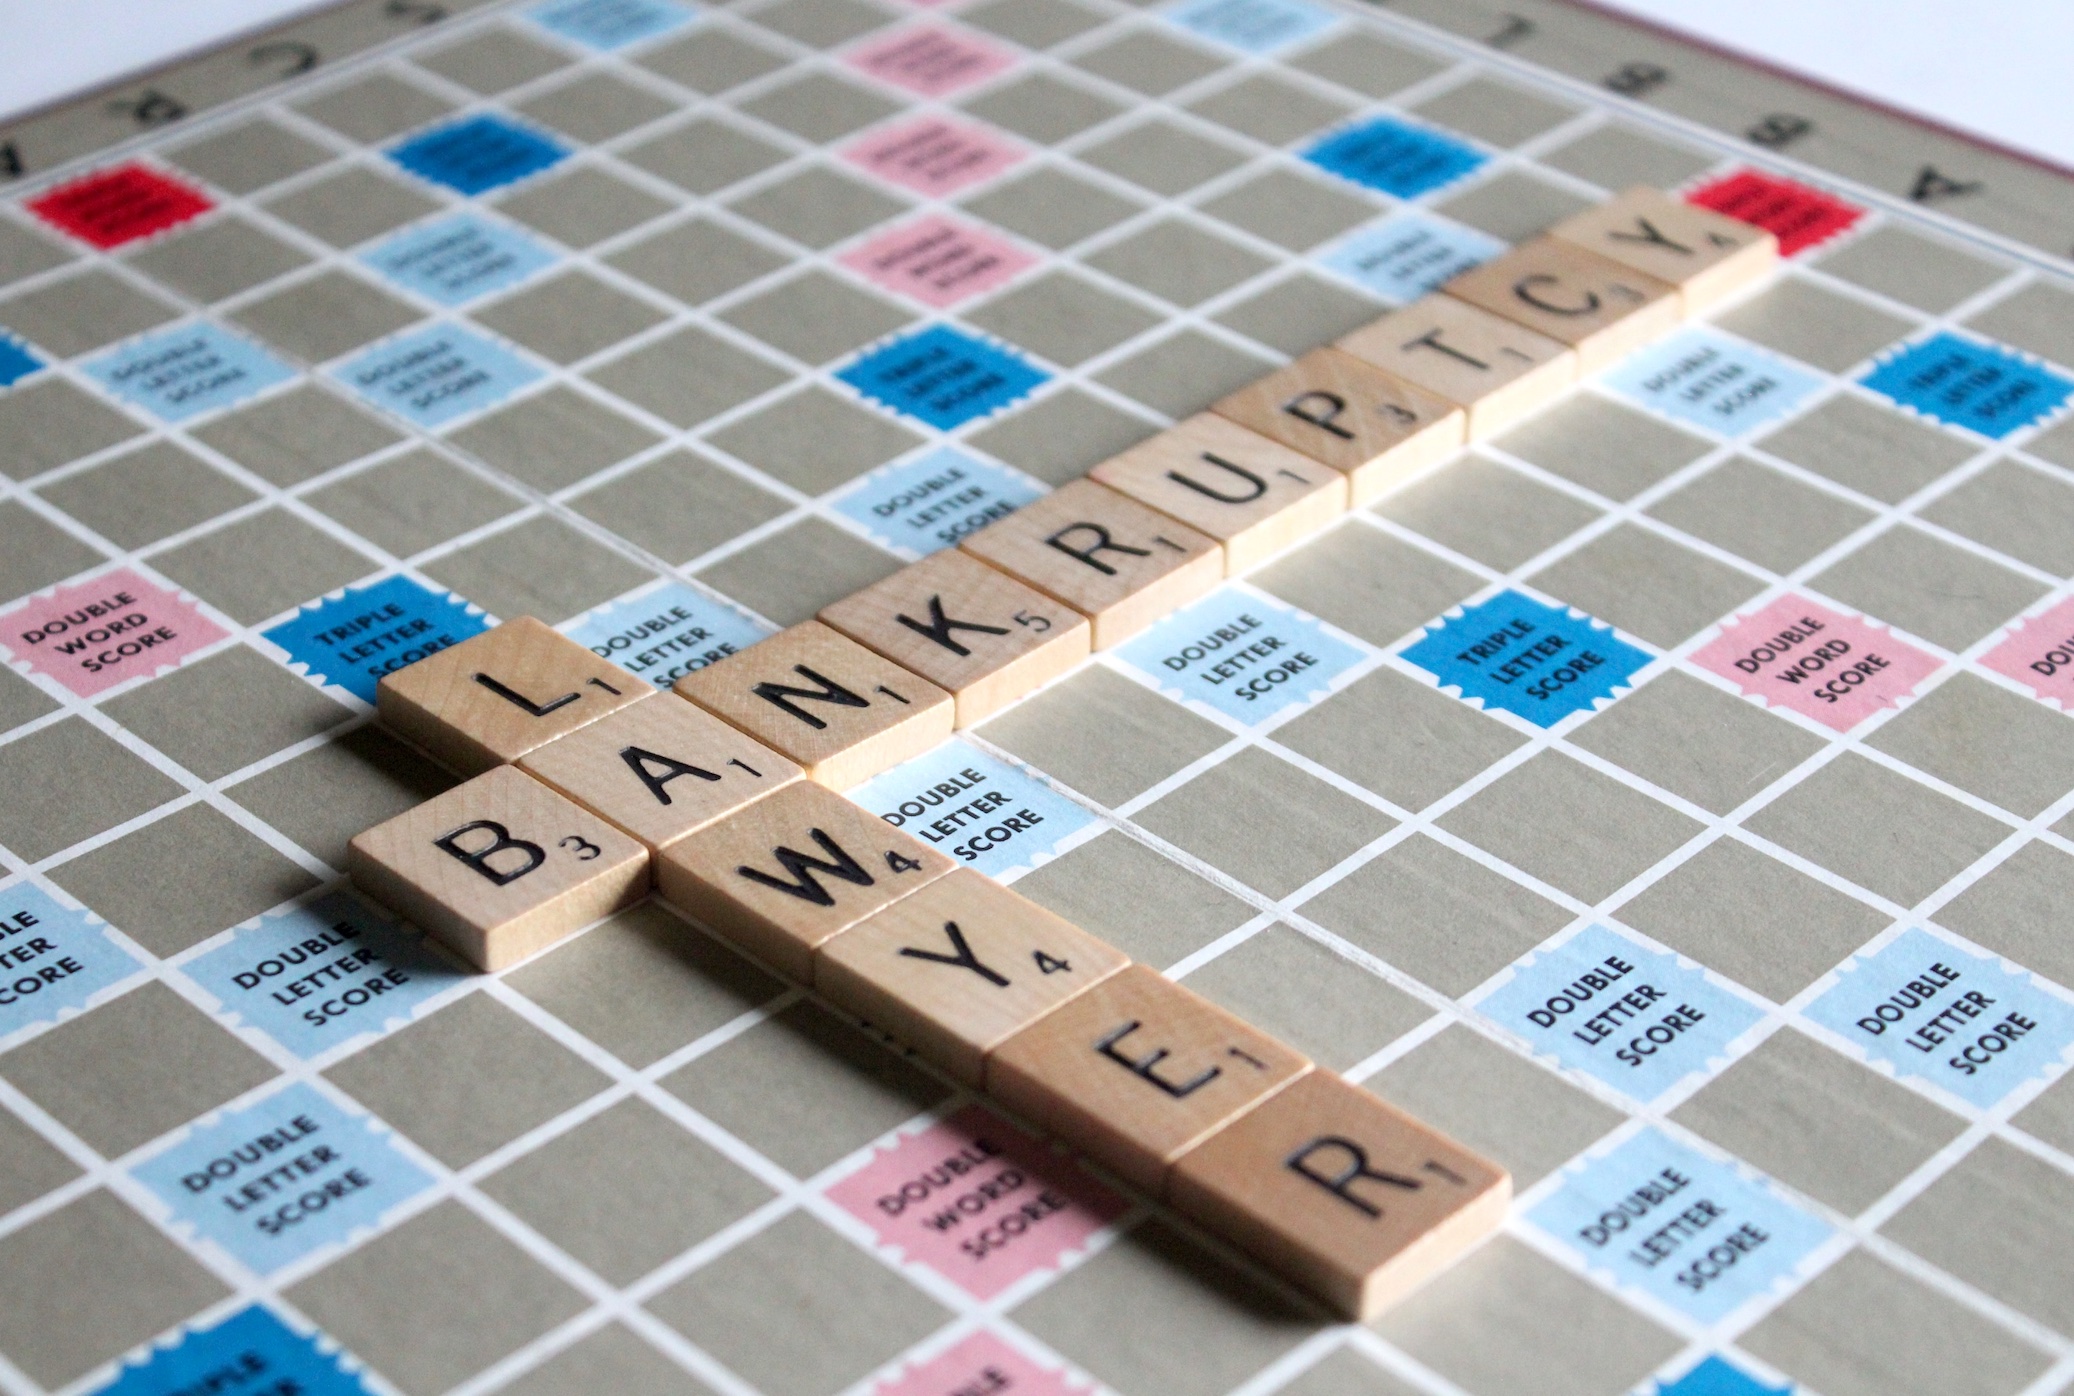 Scrabble board with tiles spelling bankruptcy lawyer. Image by Melinda Gimpel, via Unsplash.com.